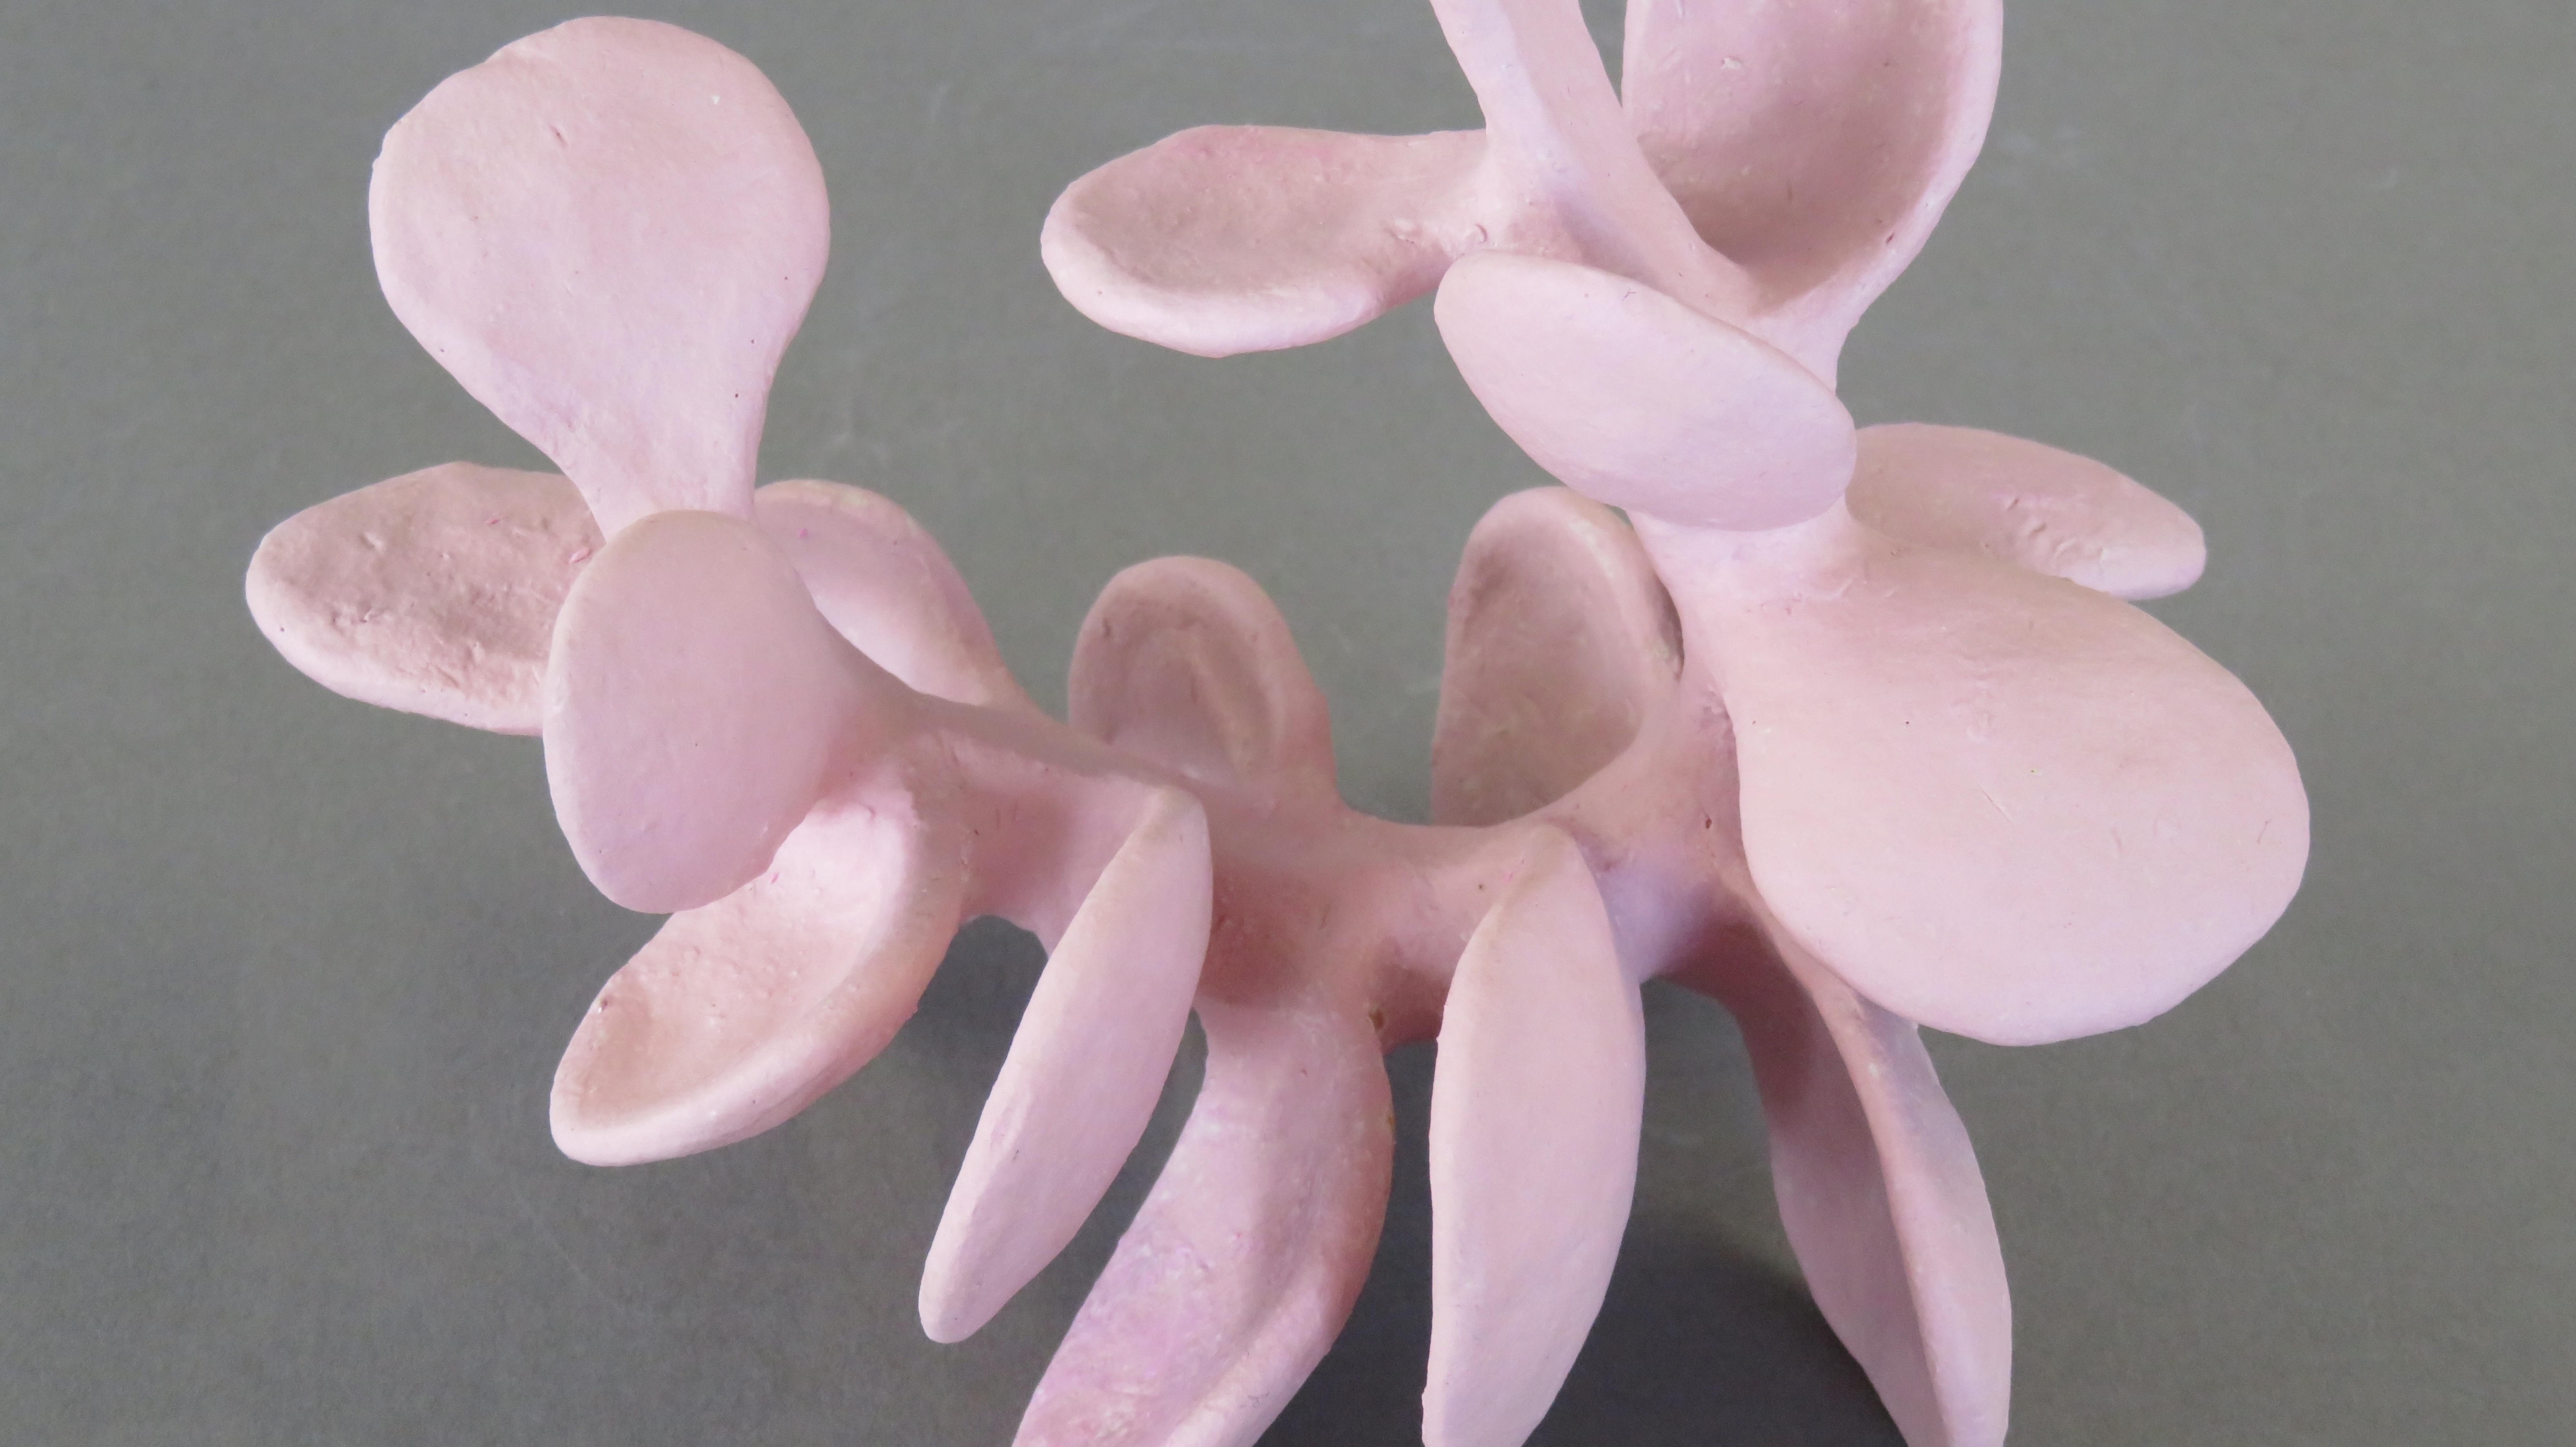 Handbuilt Ceramic Sculpture in Pink, A Flower-Like Vertebrae With Petals 4